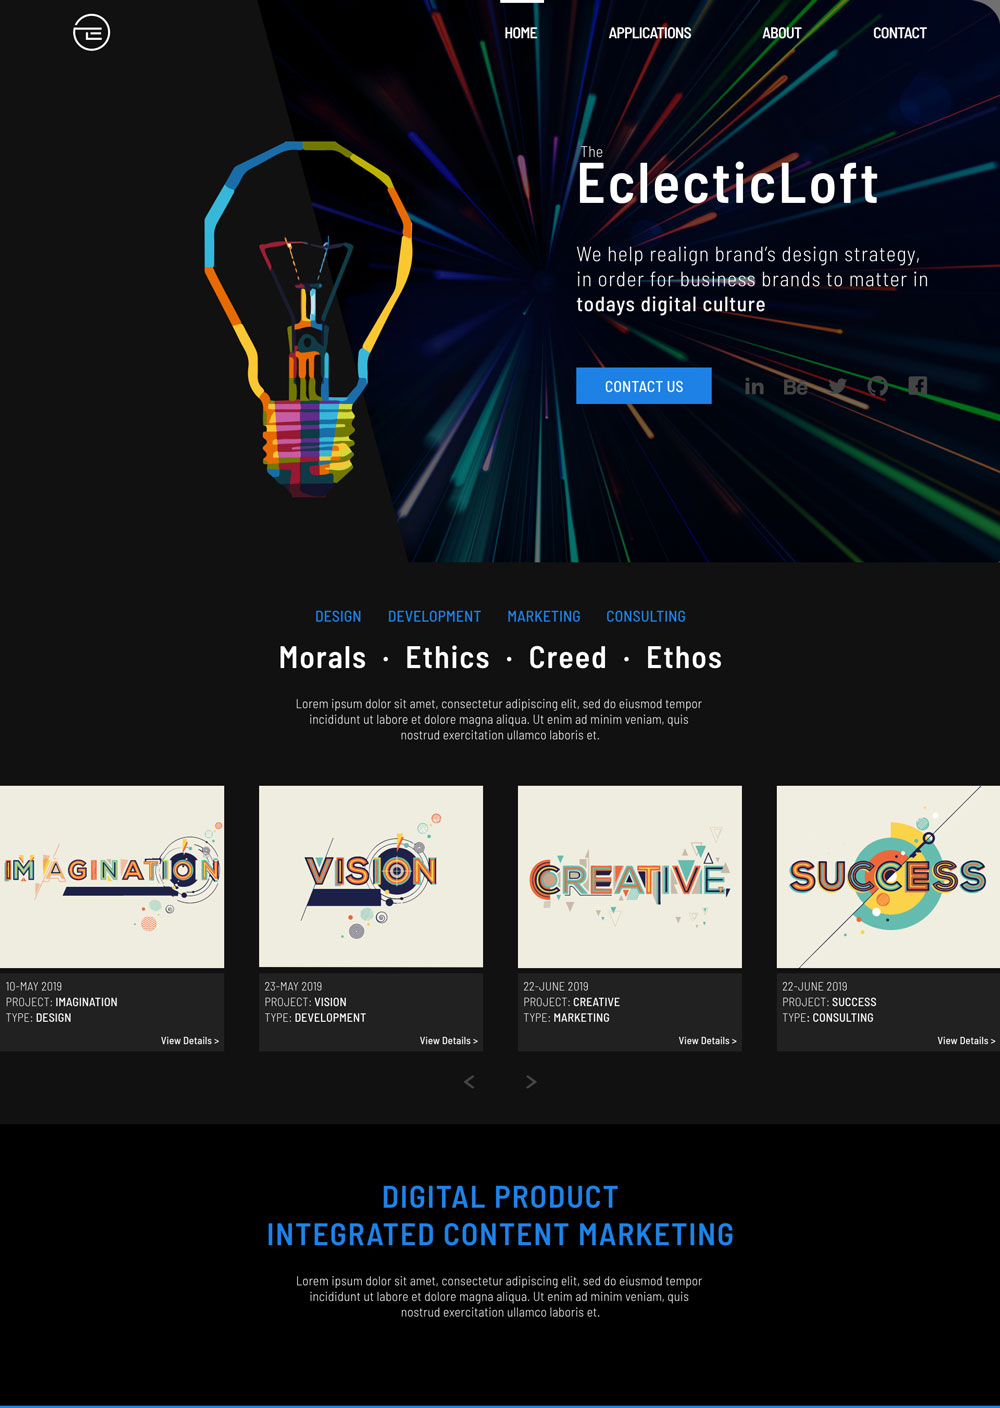 image of Eclectic Loft's prototype homepage